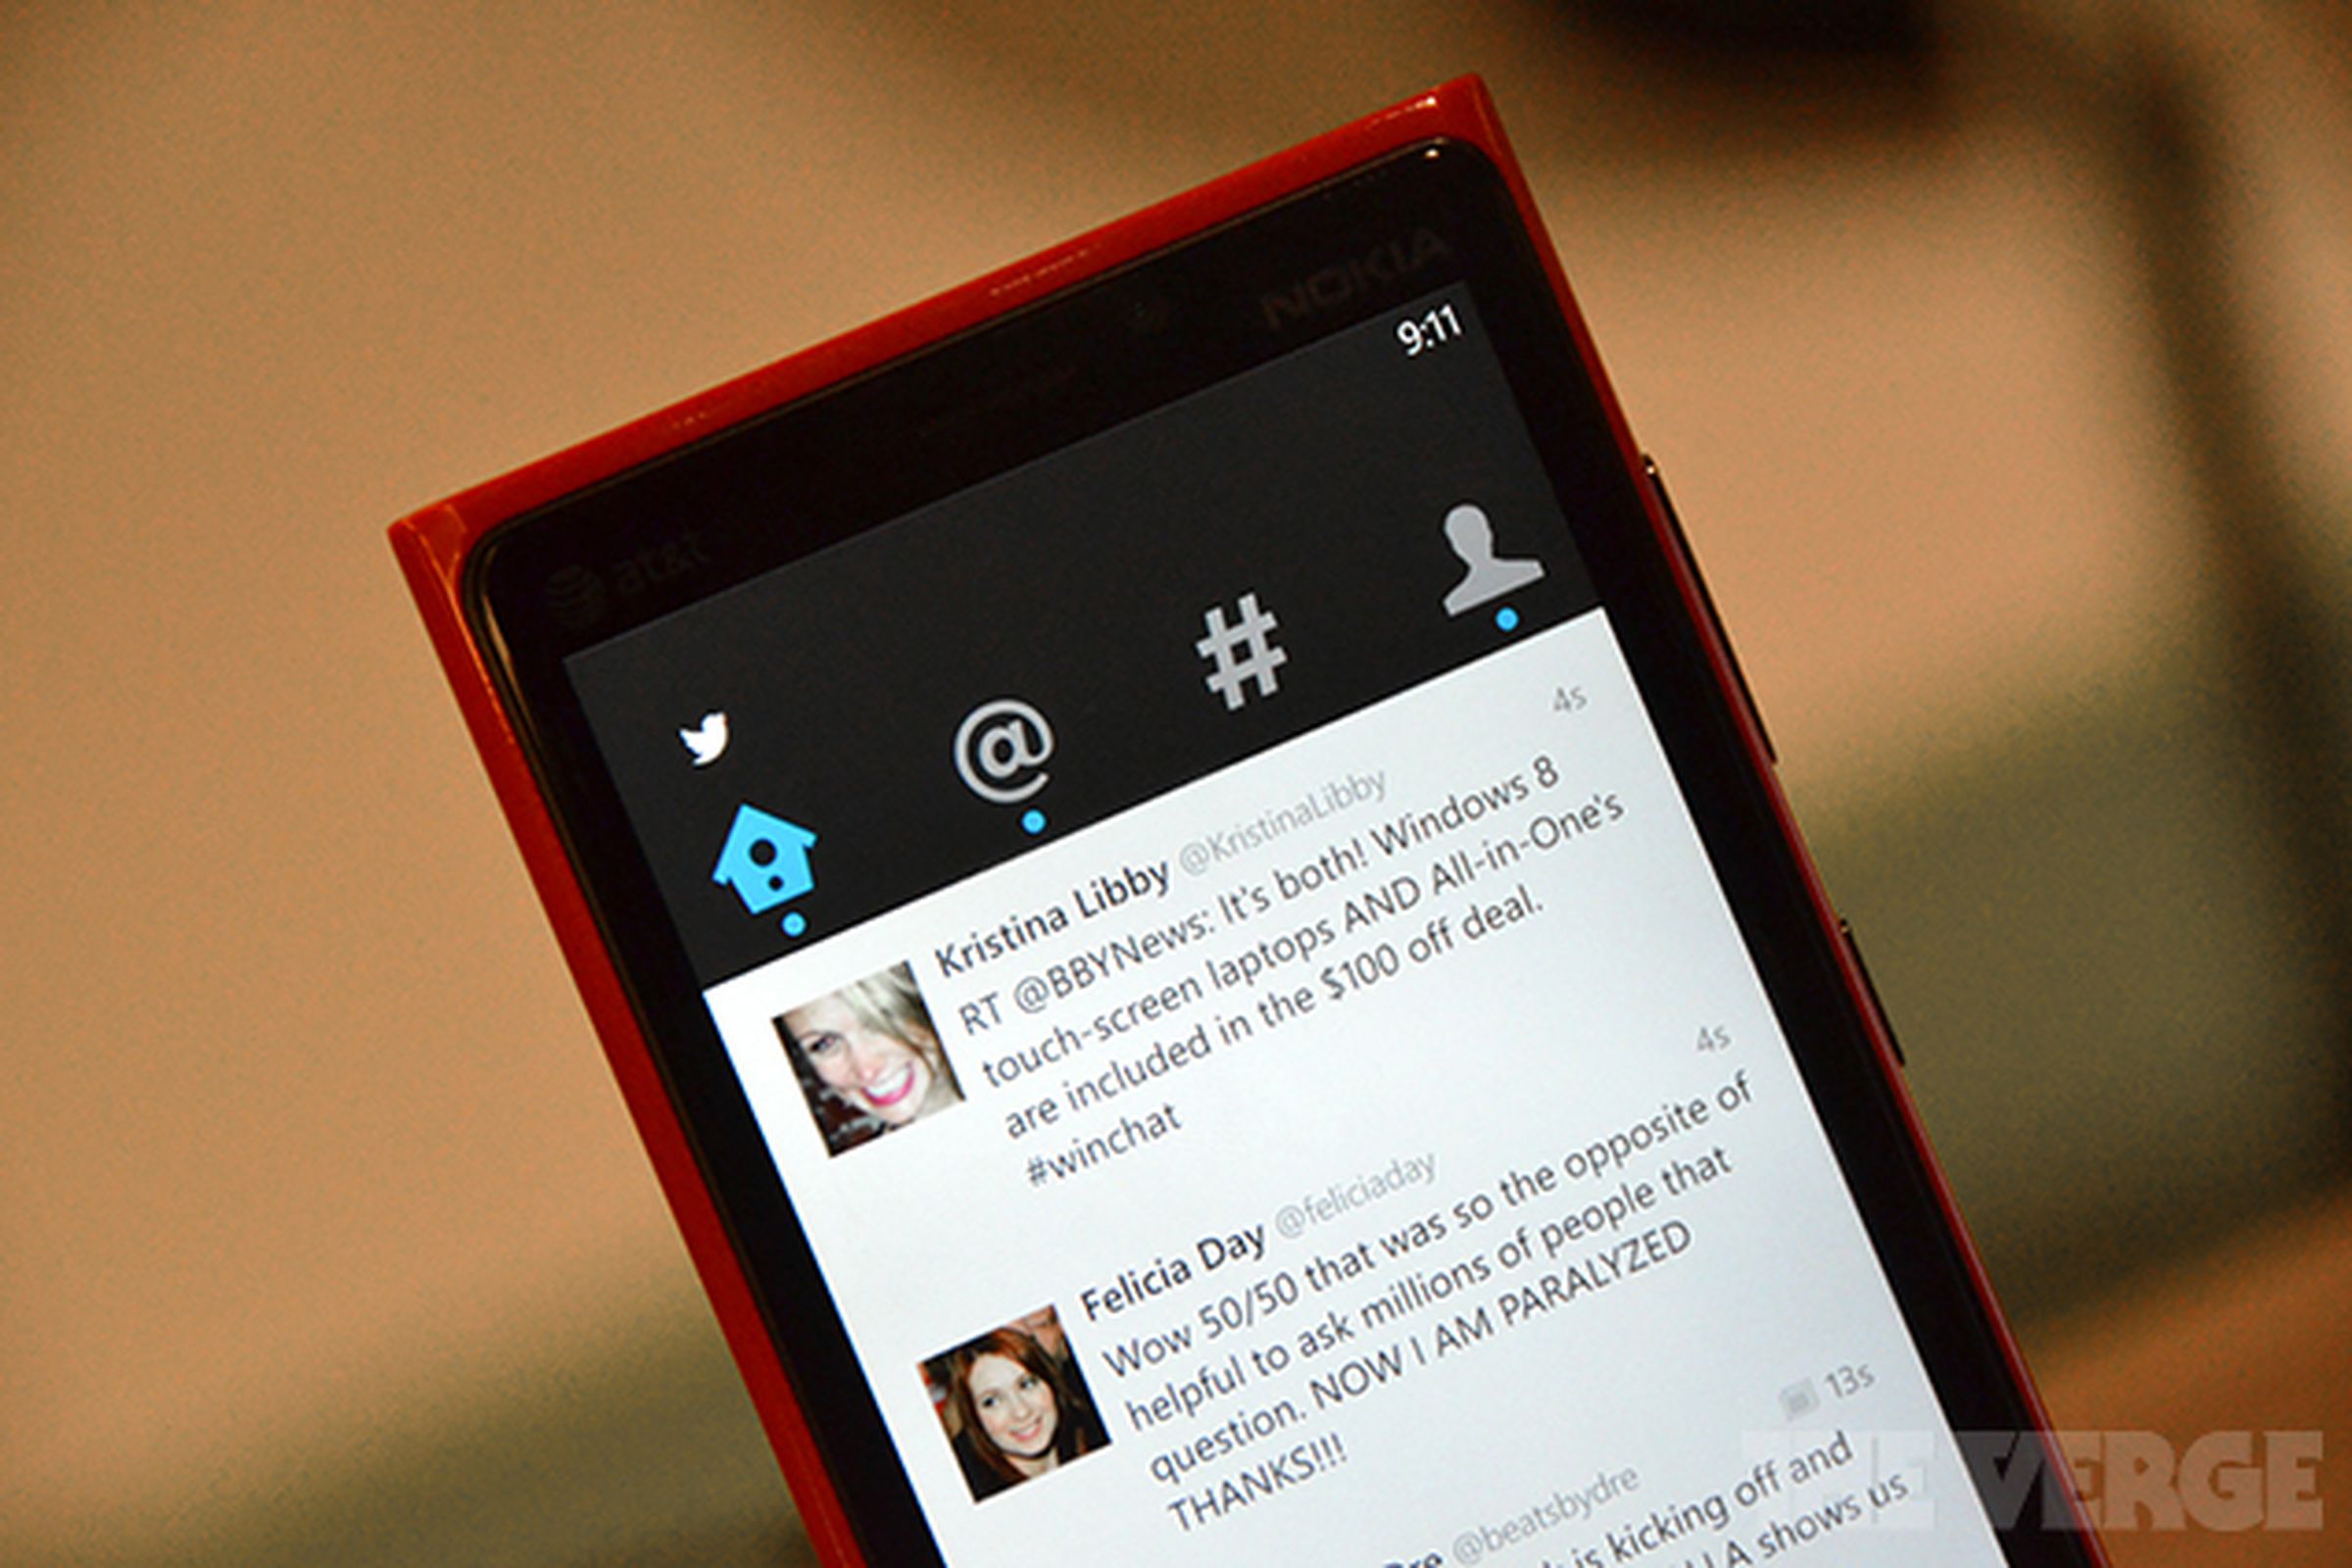 Twitter for Windows Phone